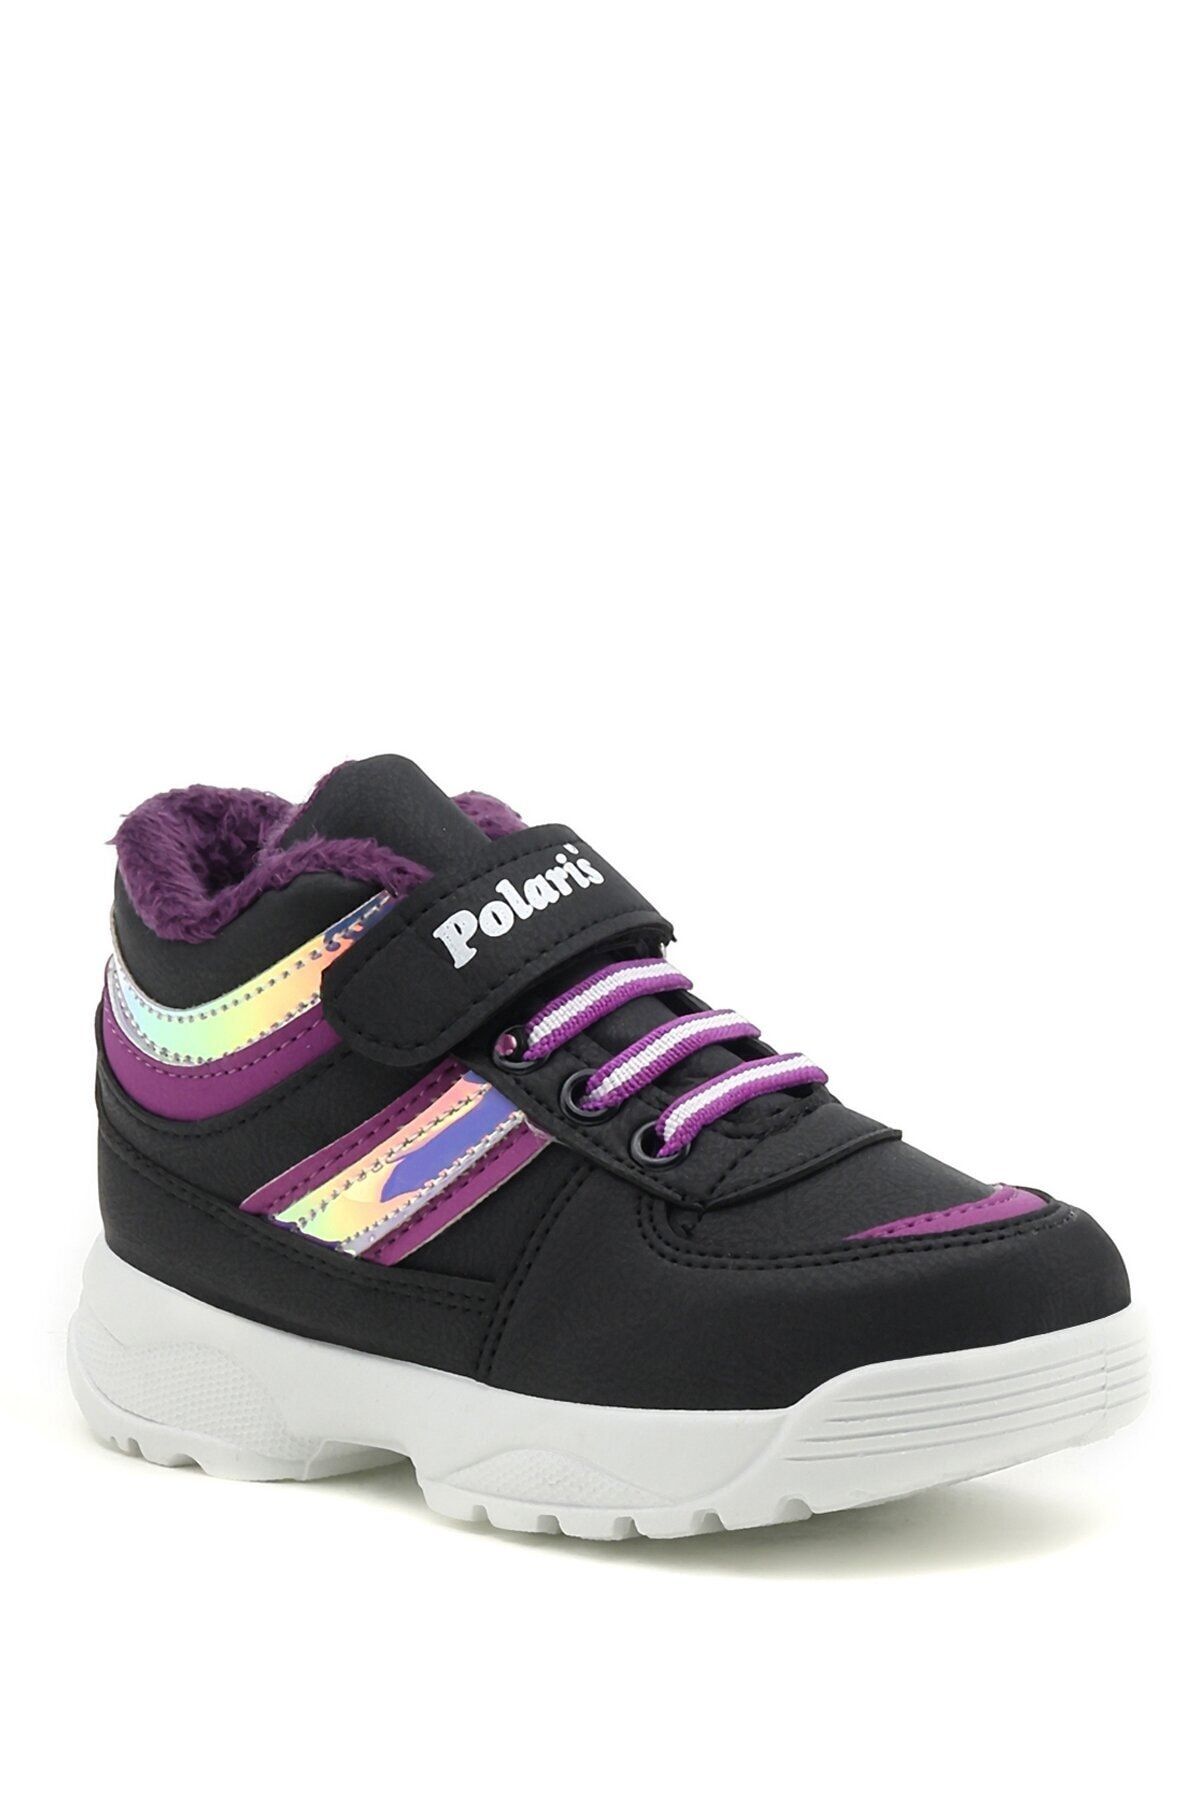 Polaris 612155.p1pr Siyah Kız Çocuk Sneaker Hi